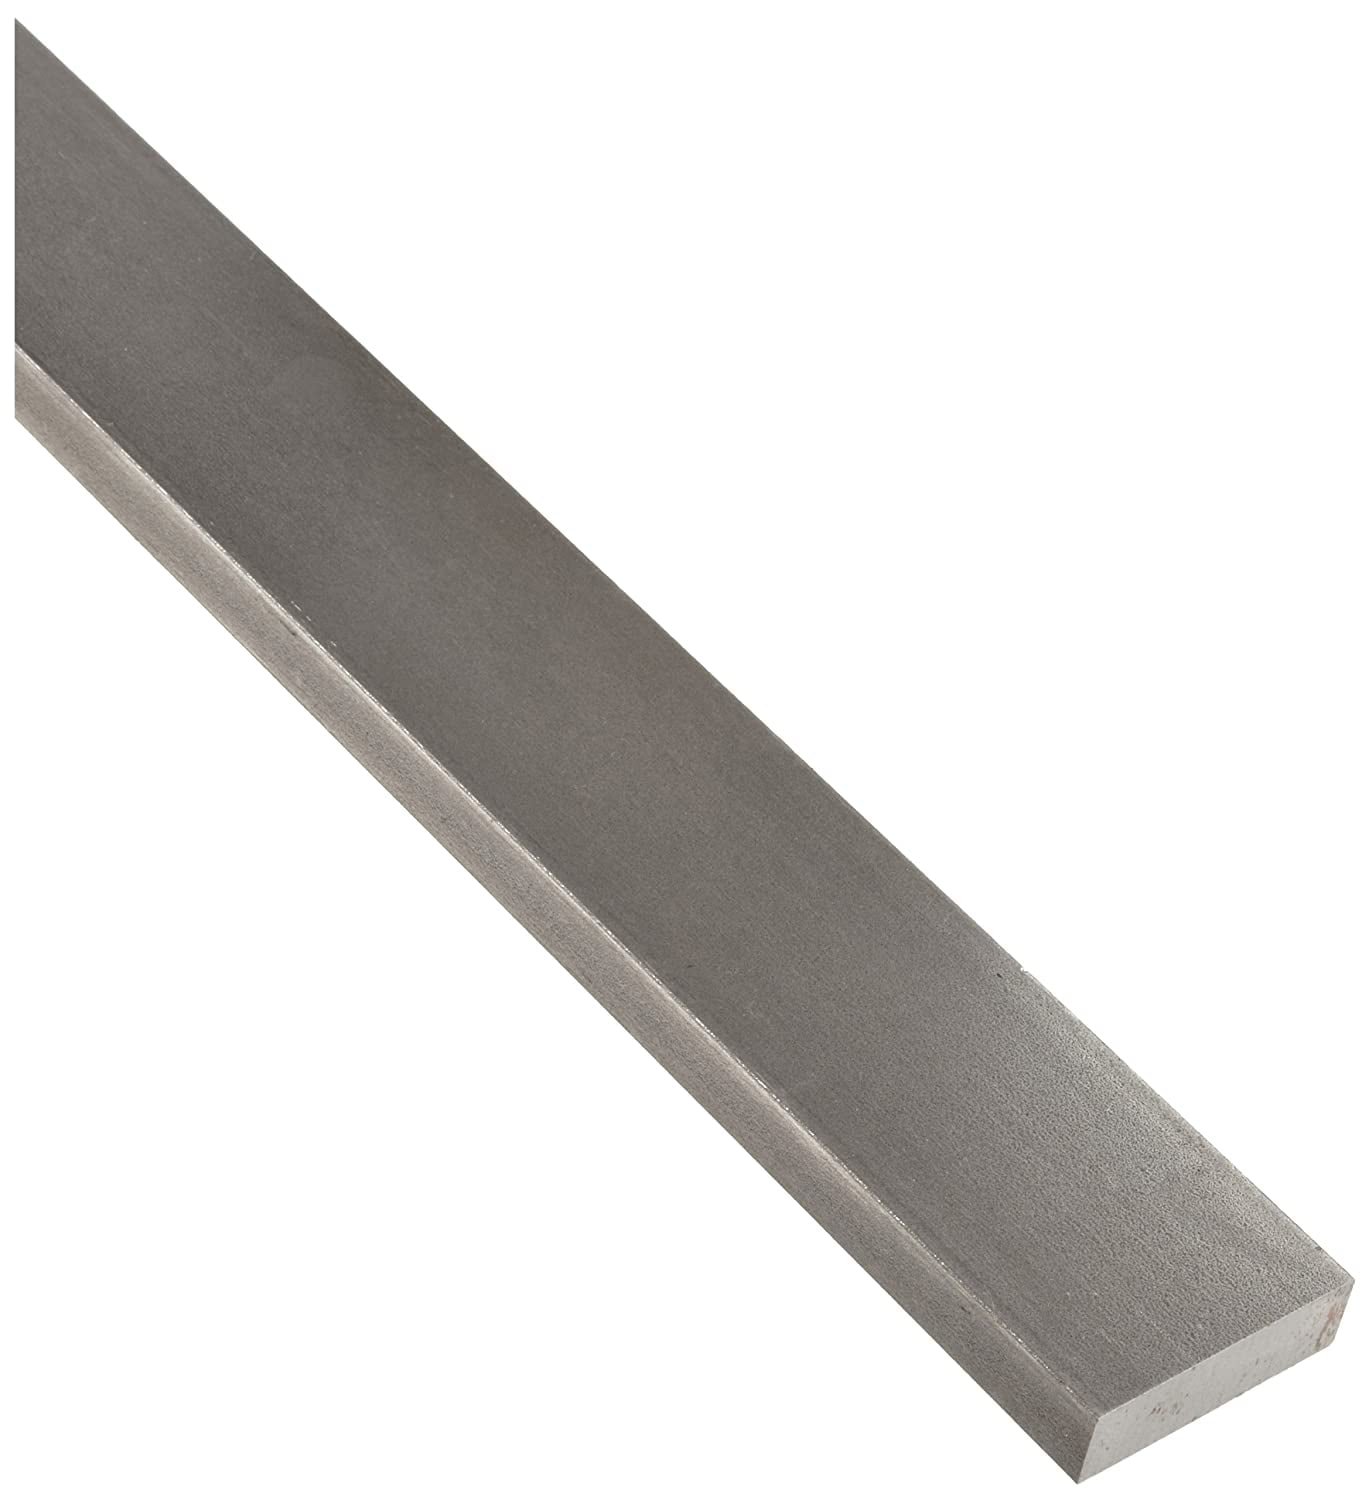 Steel Flat Bar Stock  1/4" x 1-1/2" x 6 ft Rectangular Unpolished 1018 Alloy 